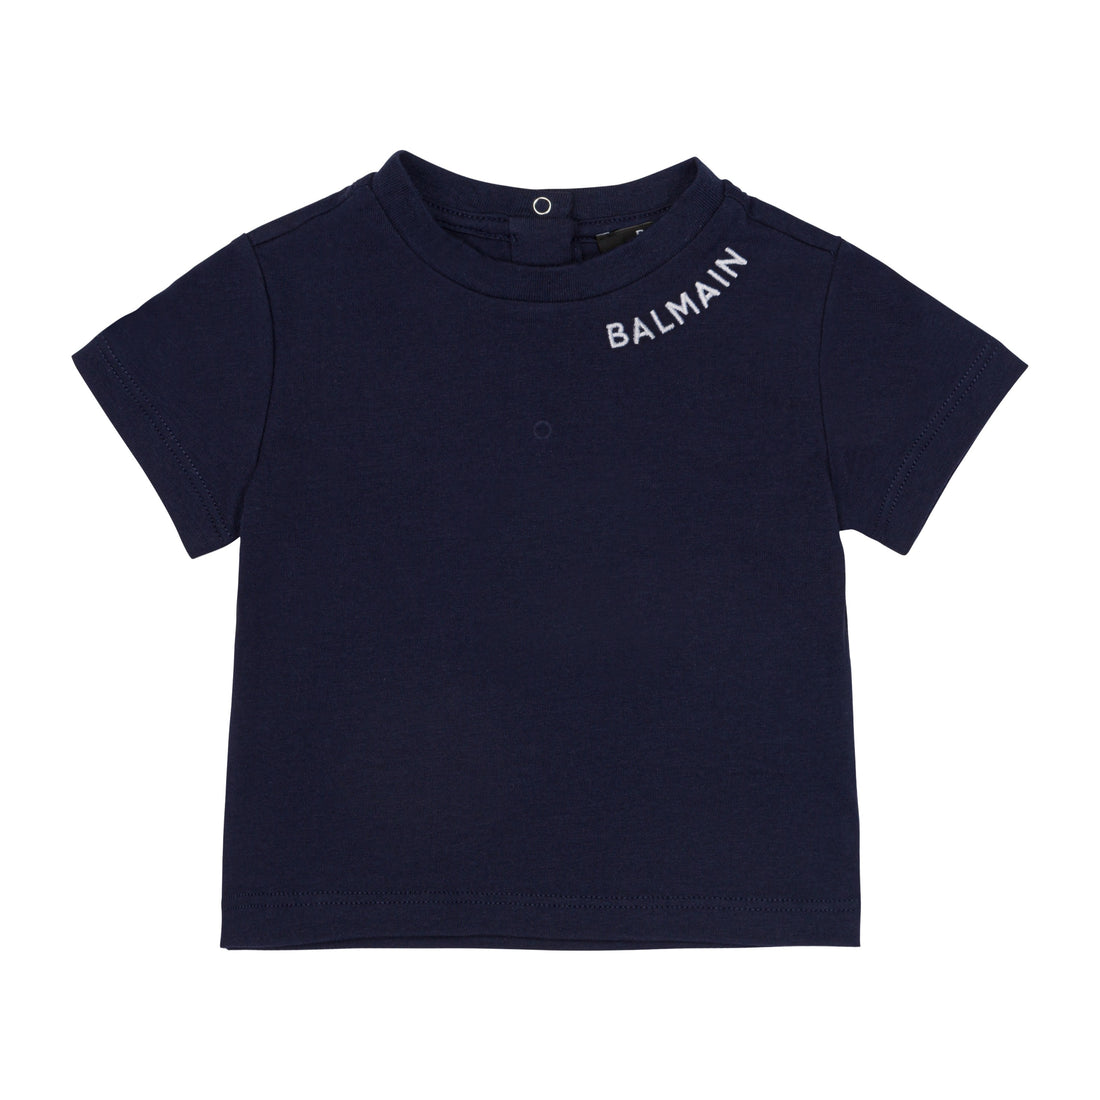 Classic Balmain Cotton T-Shirt/Top | Schools Out Style: Bv8551